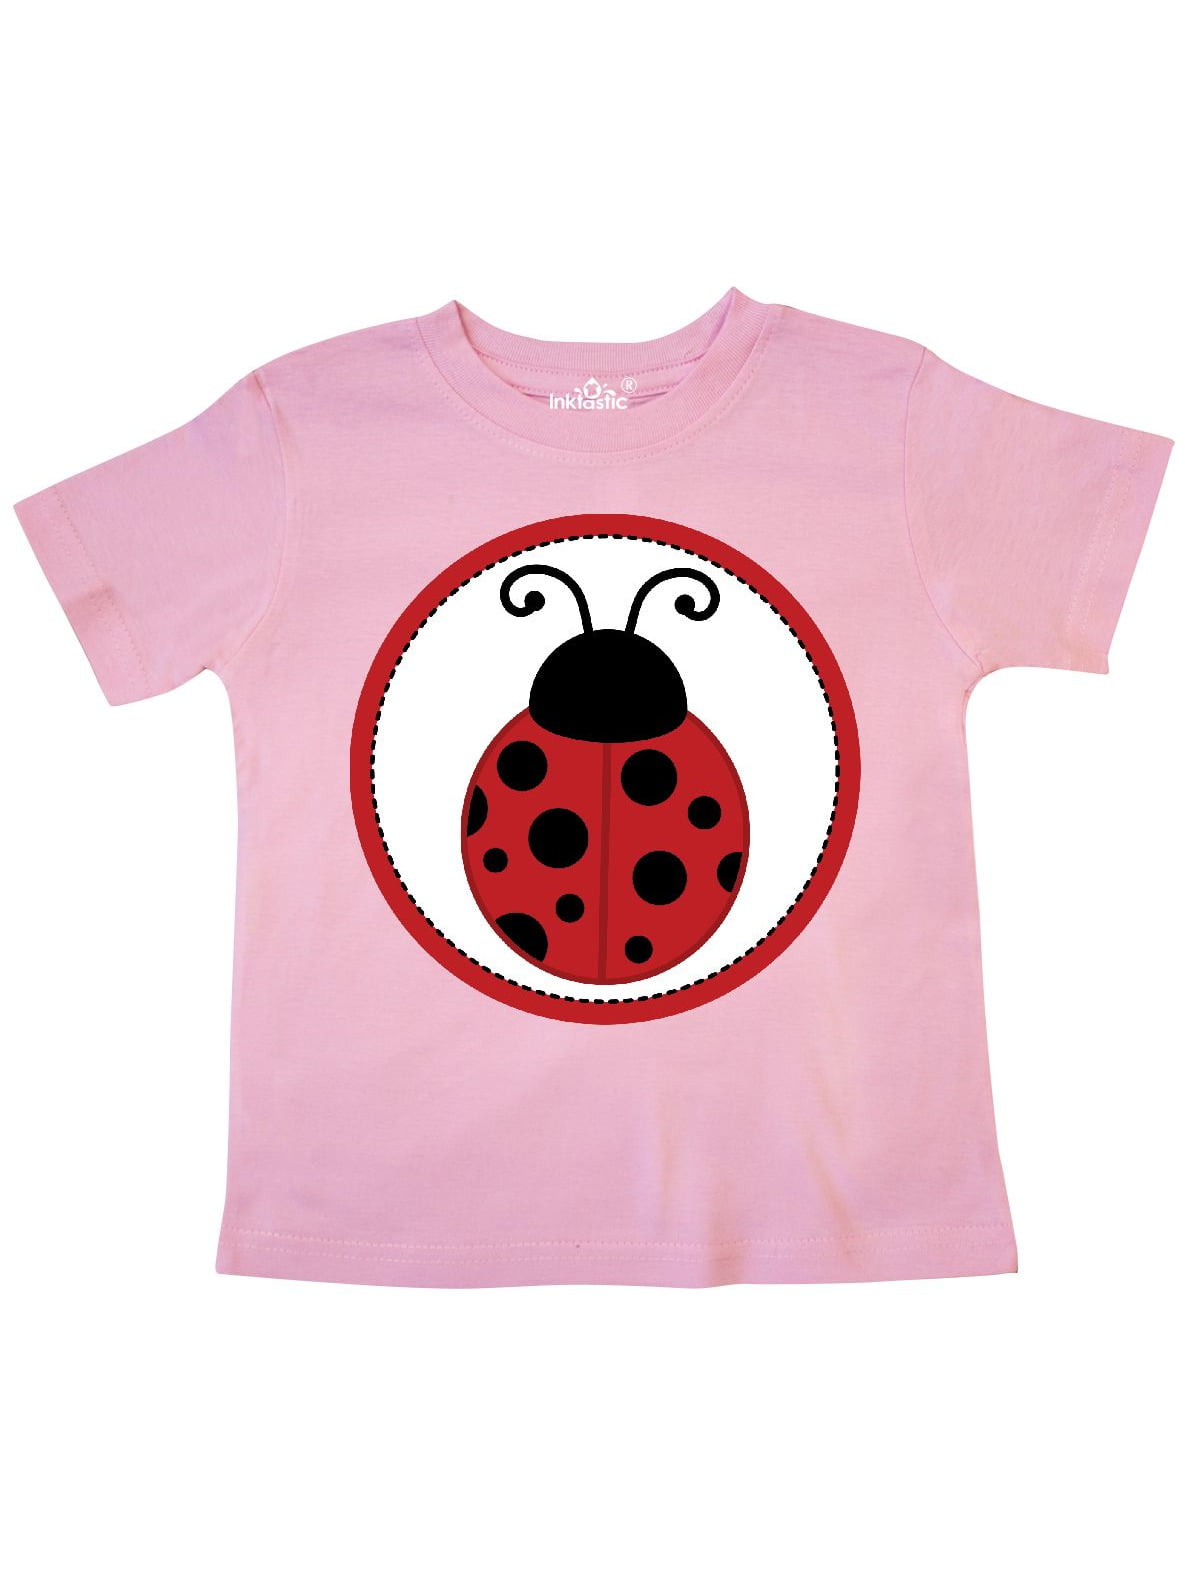 INKtastic - Ladybug circle Toddler T-Shirt - Walmart.com - Walmart.com